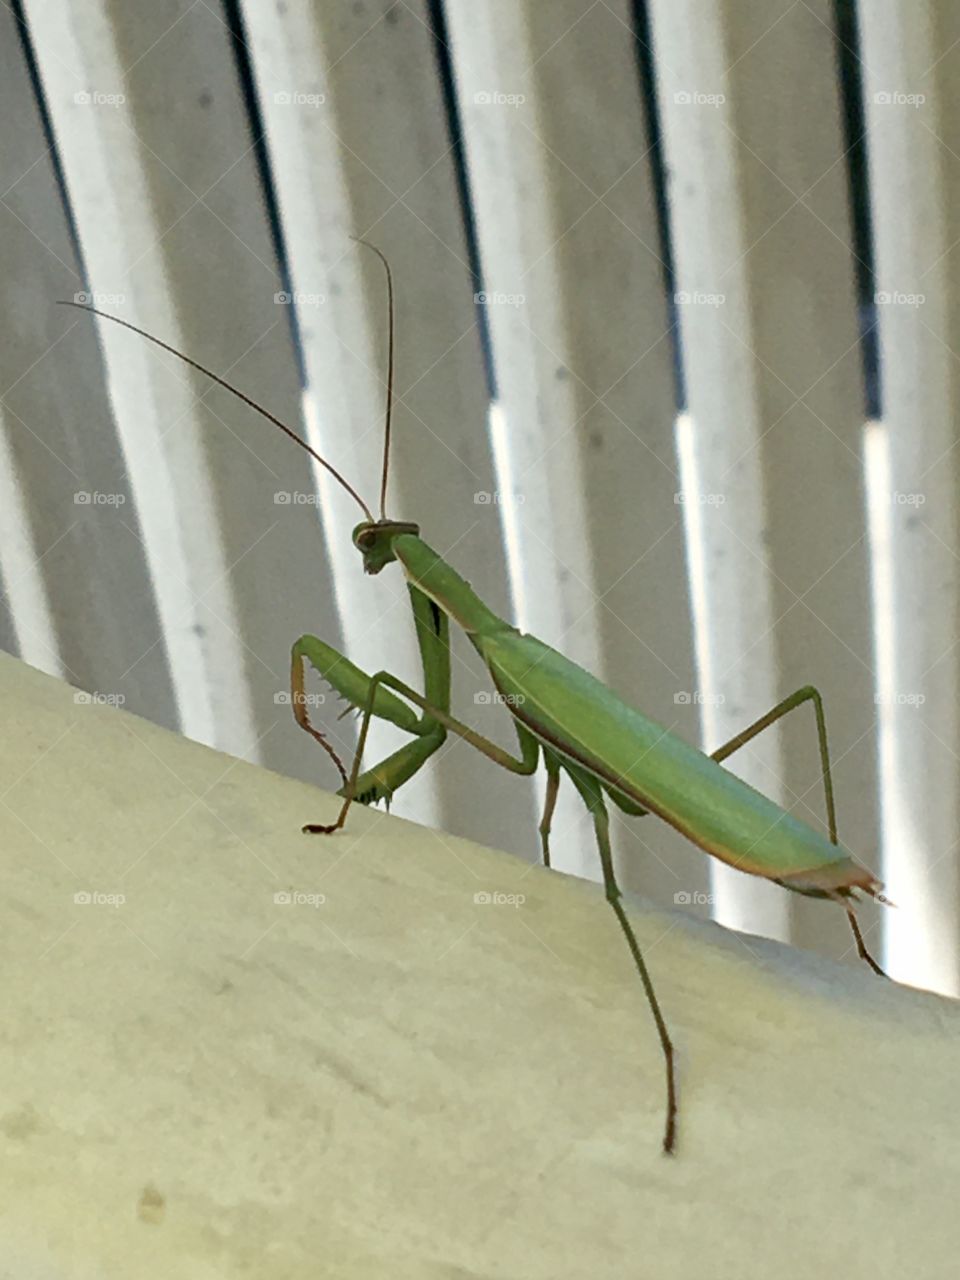 Praying mantis on a garden chair 